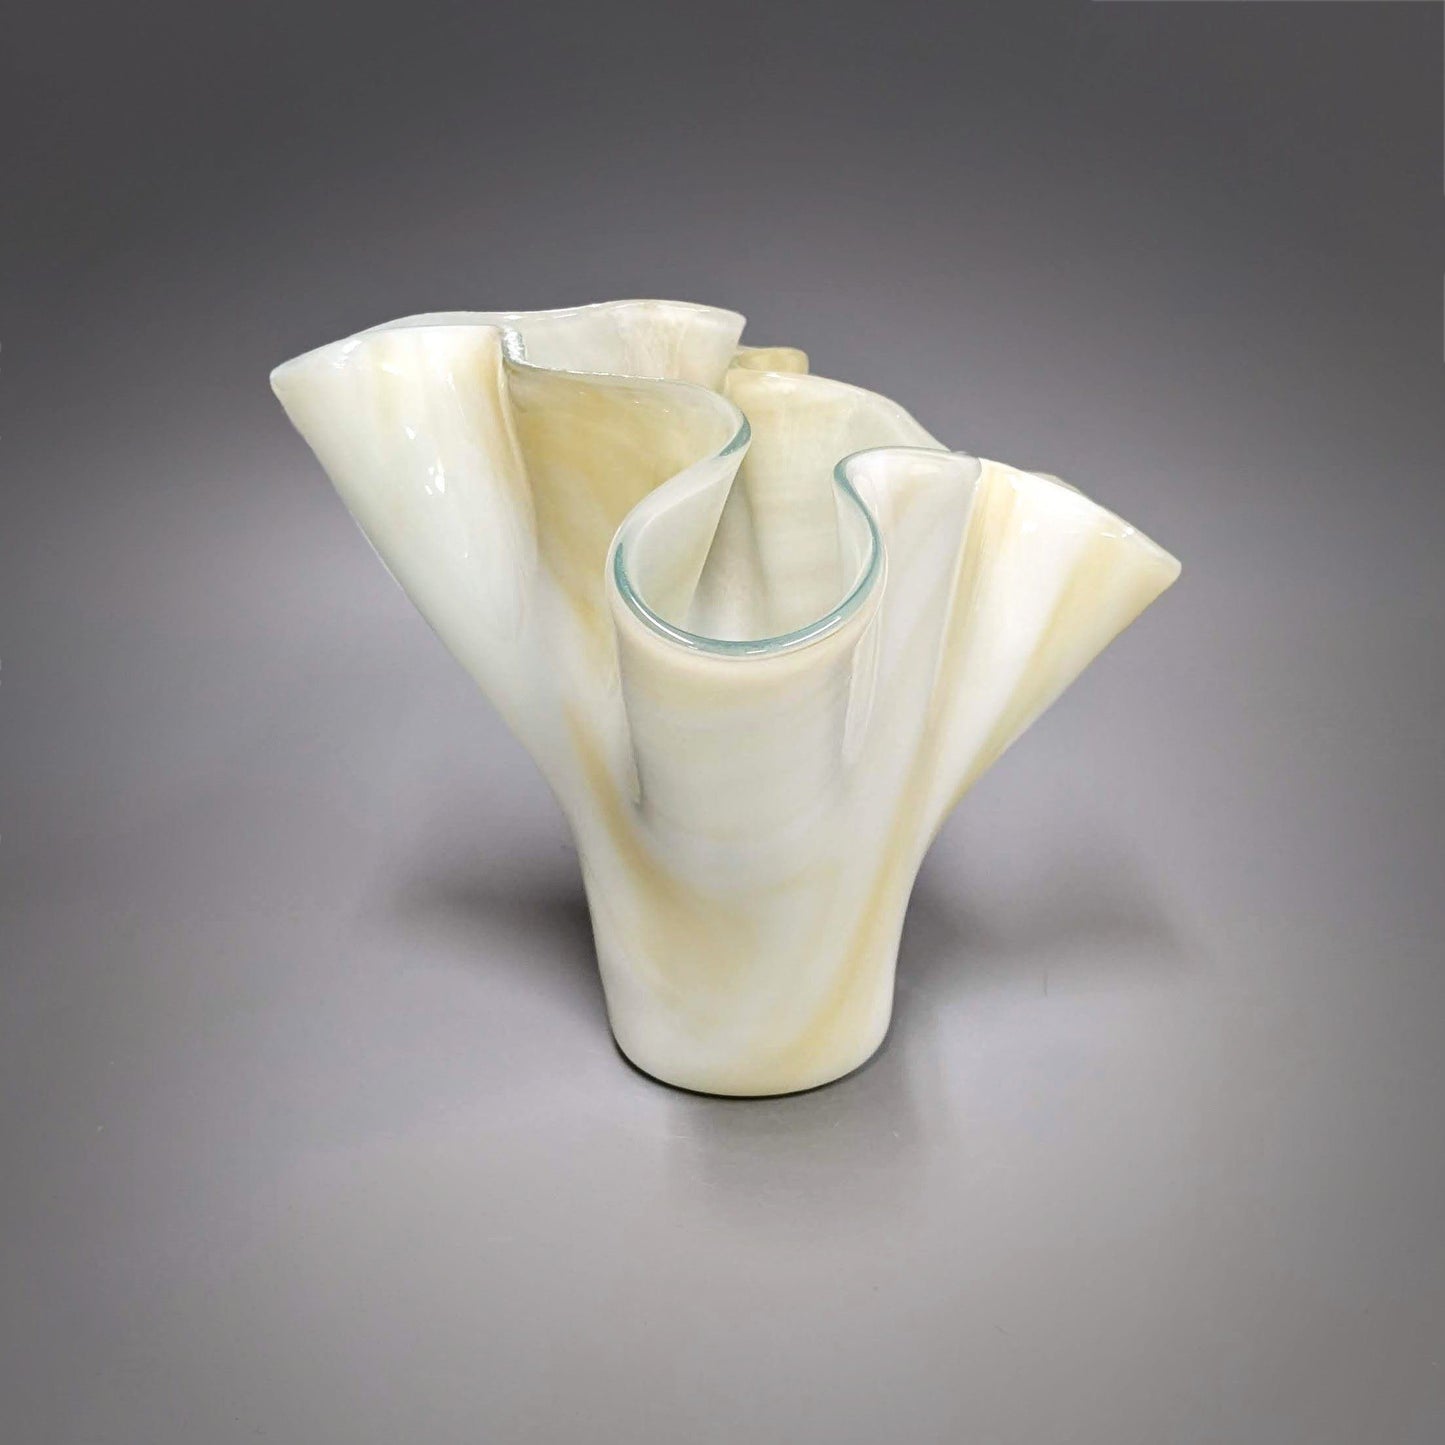 Glass Art Vase in White and Buttercream Tan | Unique Gift Ideas